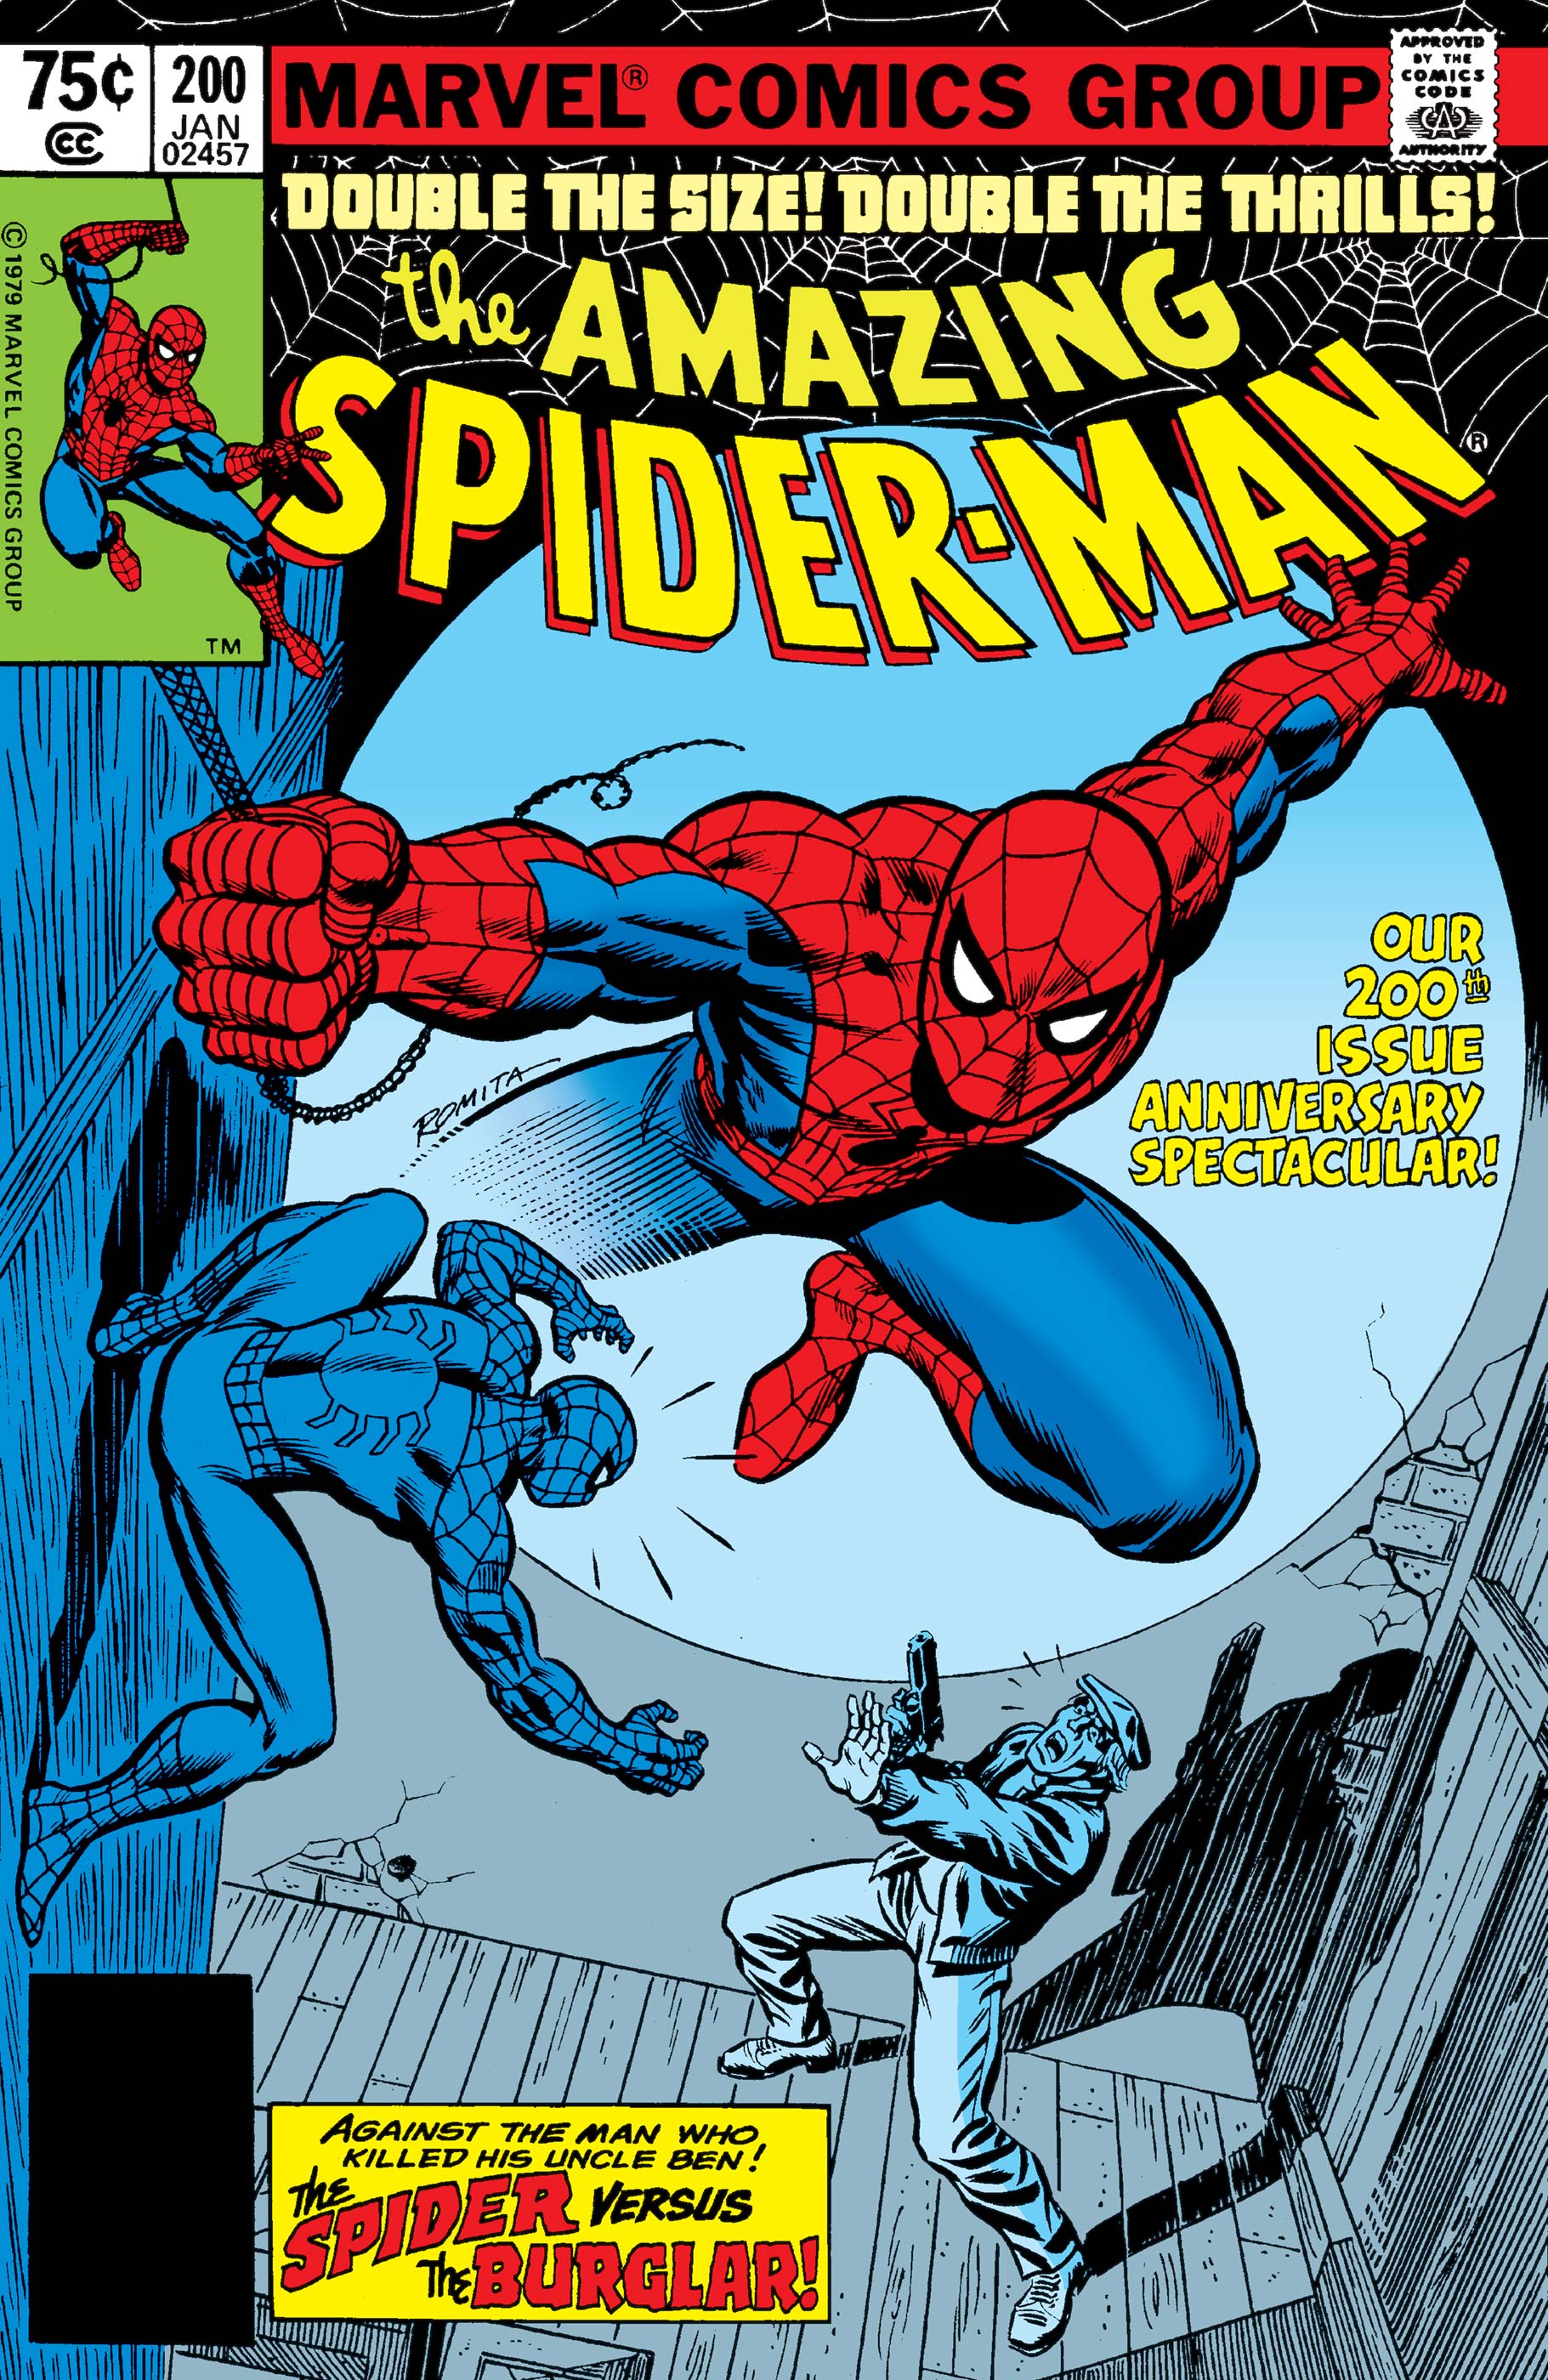 The Amazing Spider-Man (1963) #200